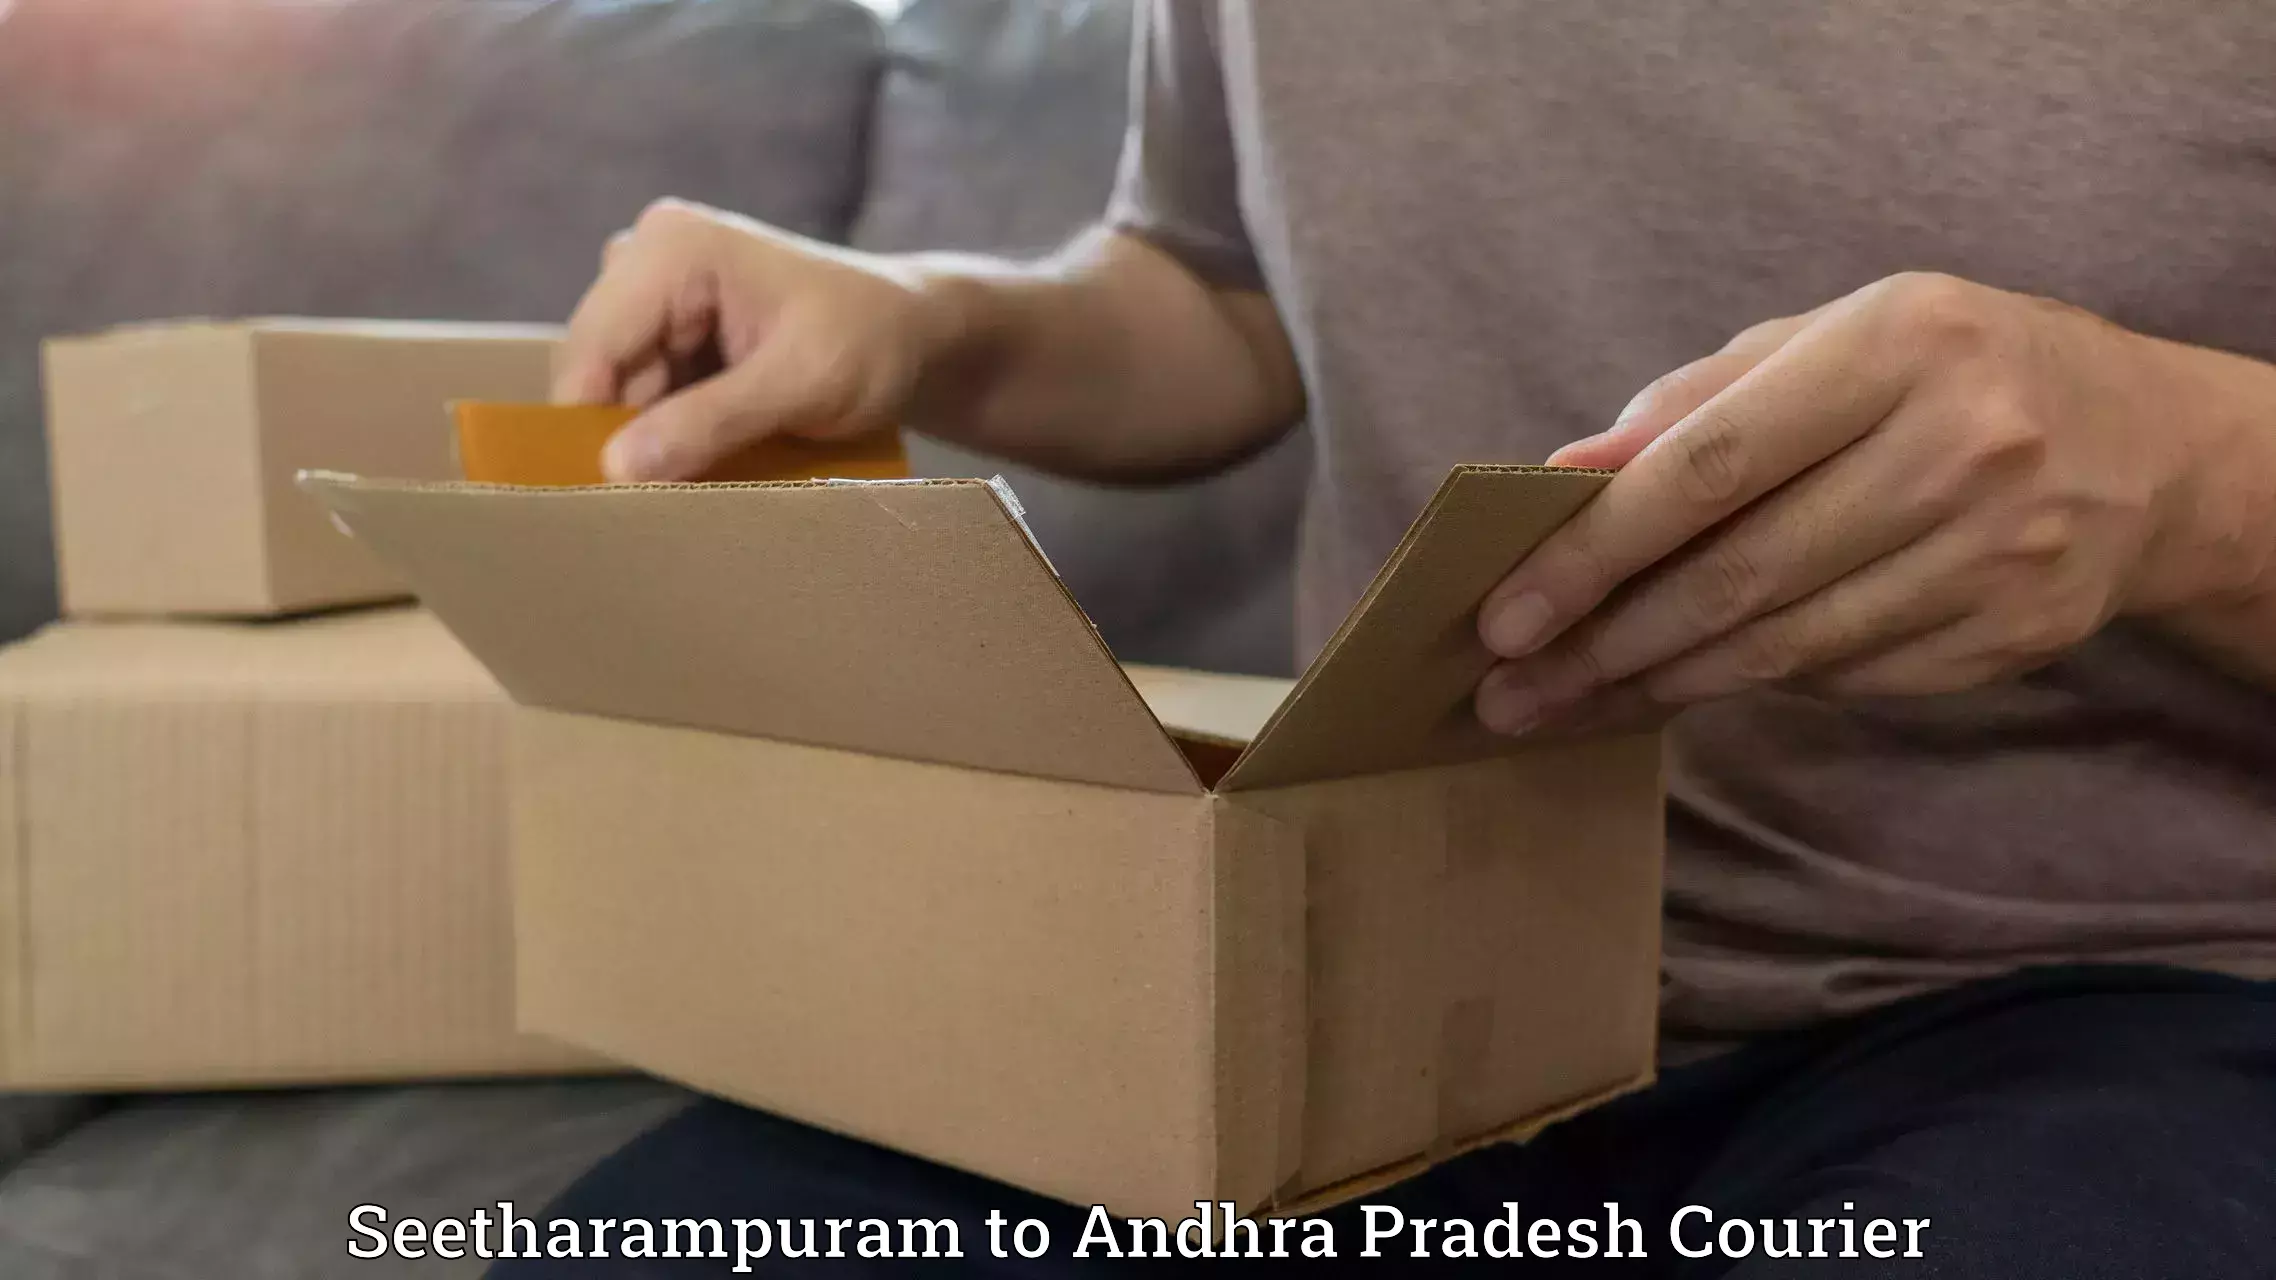 Efficient order fulfillment Seetharampuram to Gorantla